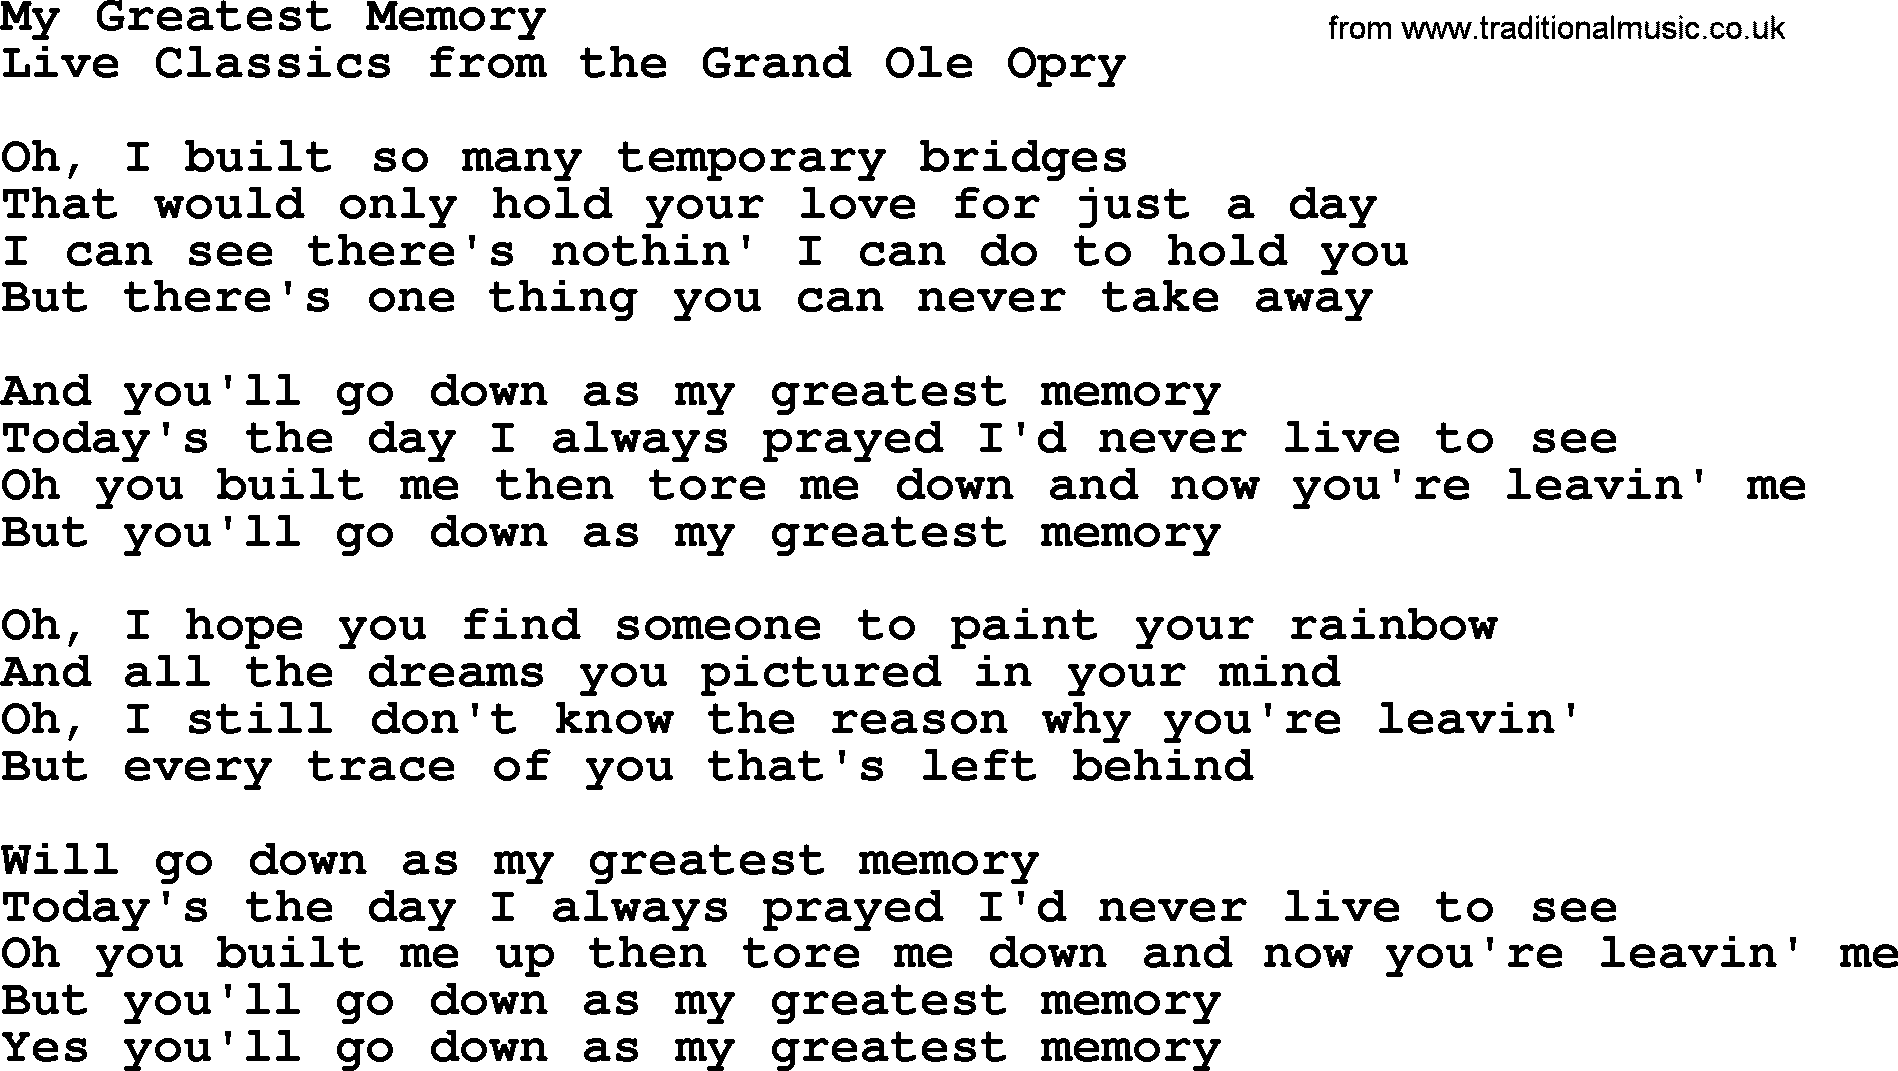 Marty Robbins song: My Greatest Memory, lyrics